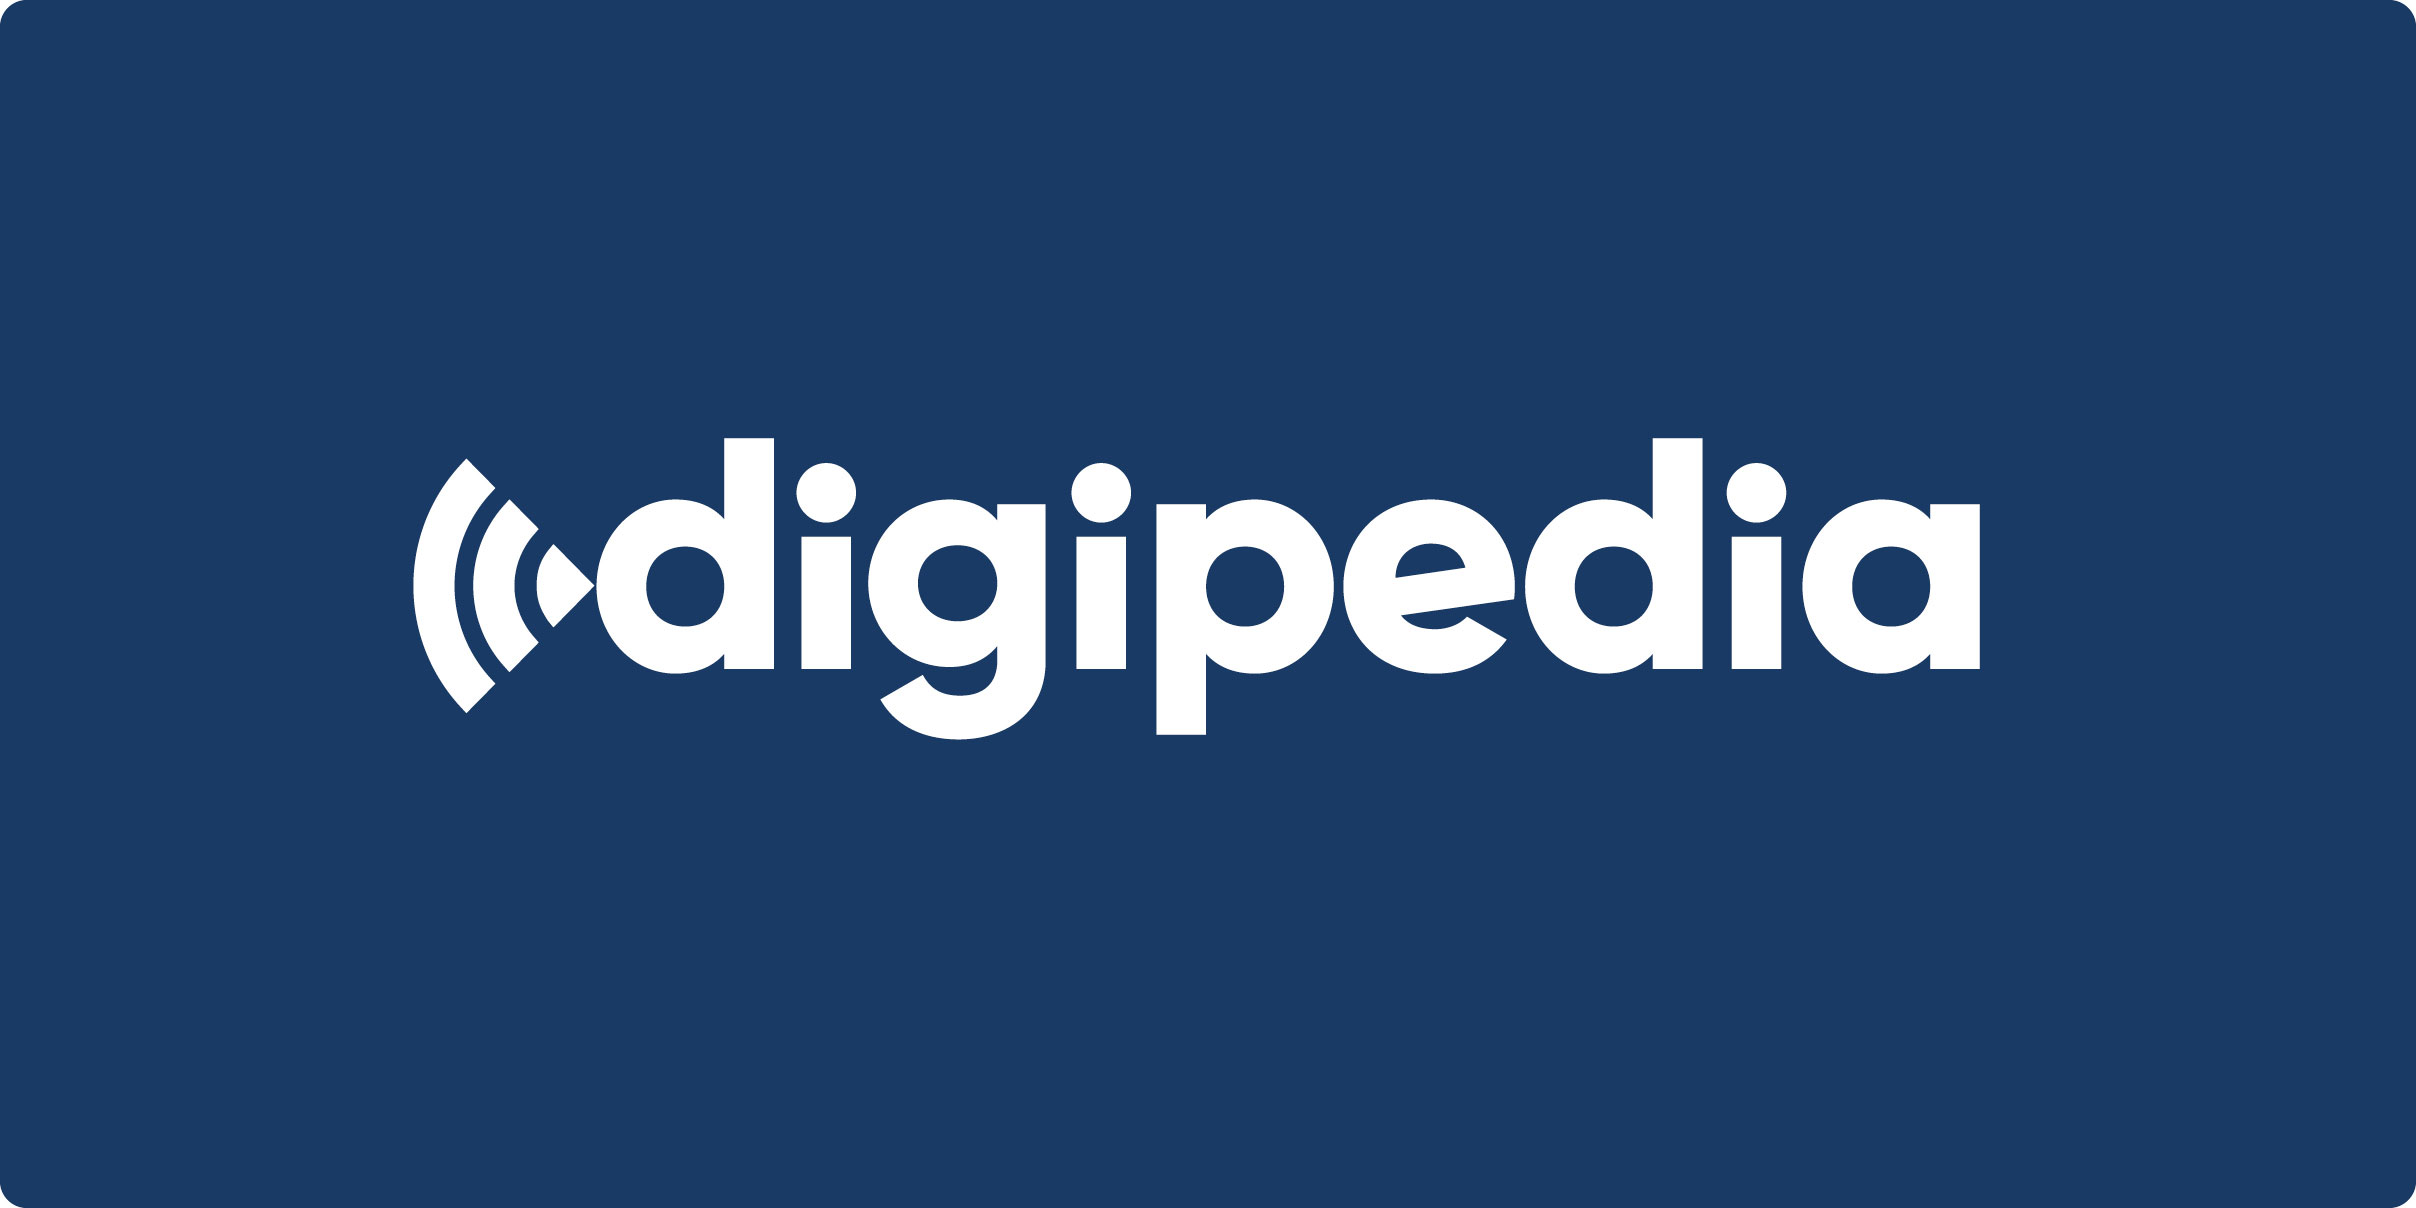 Digipedia.hu – logo kék háttéren